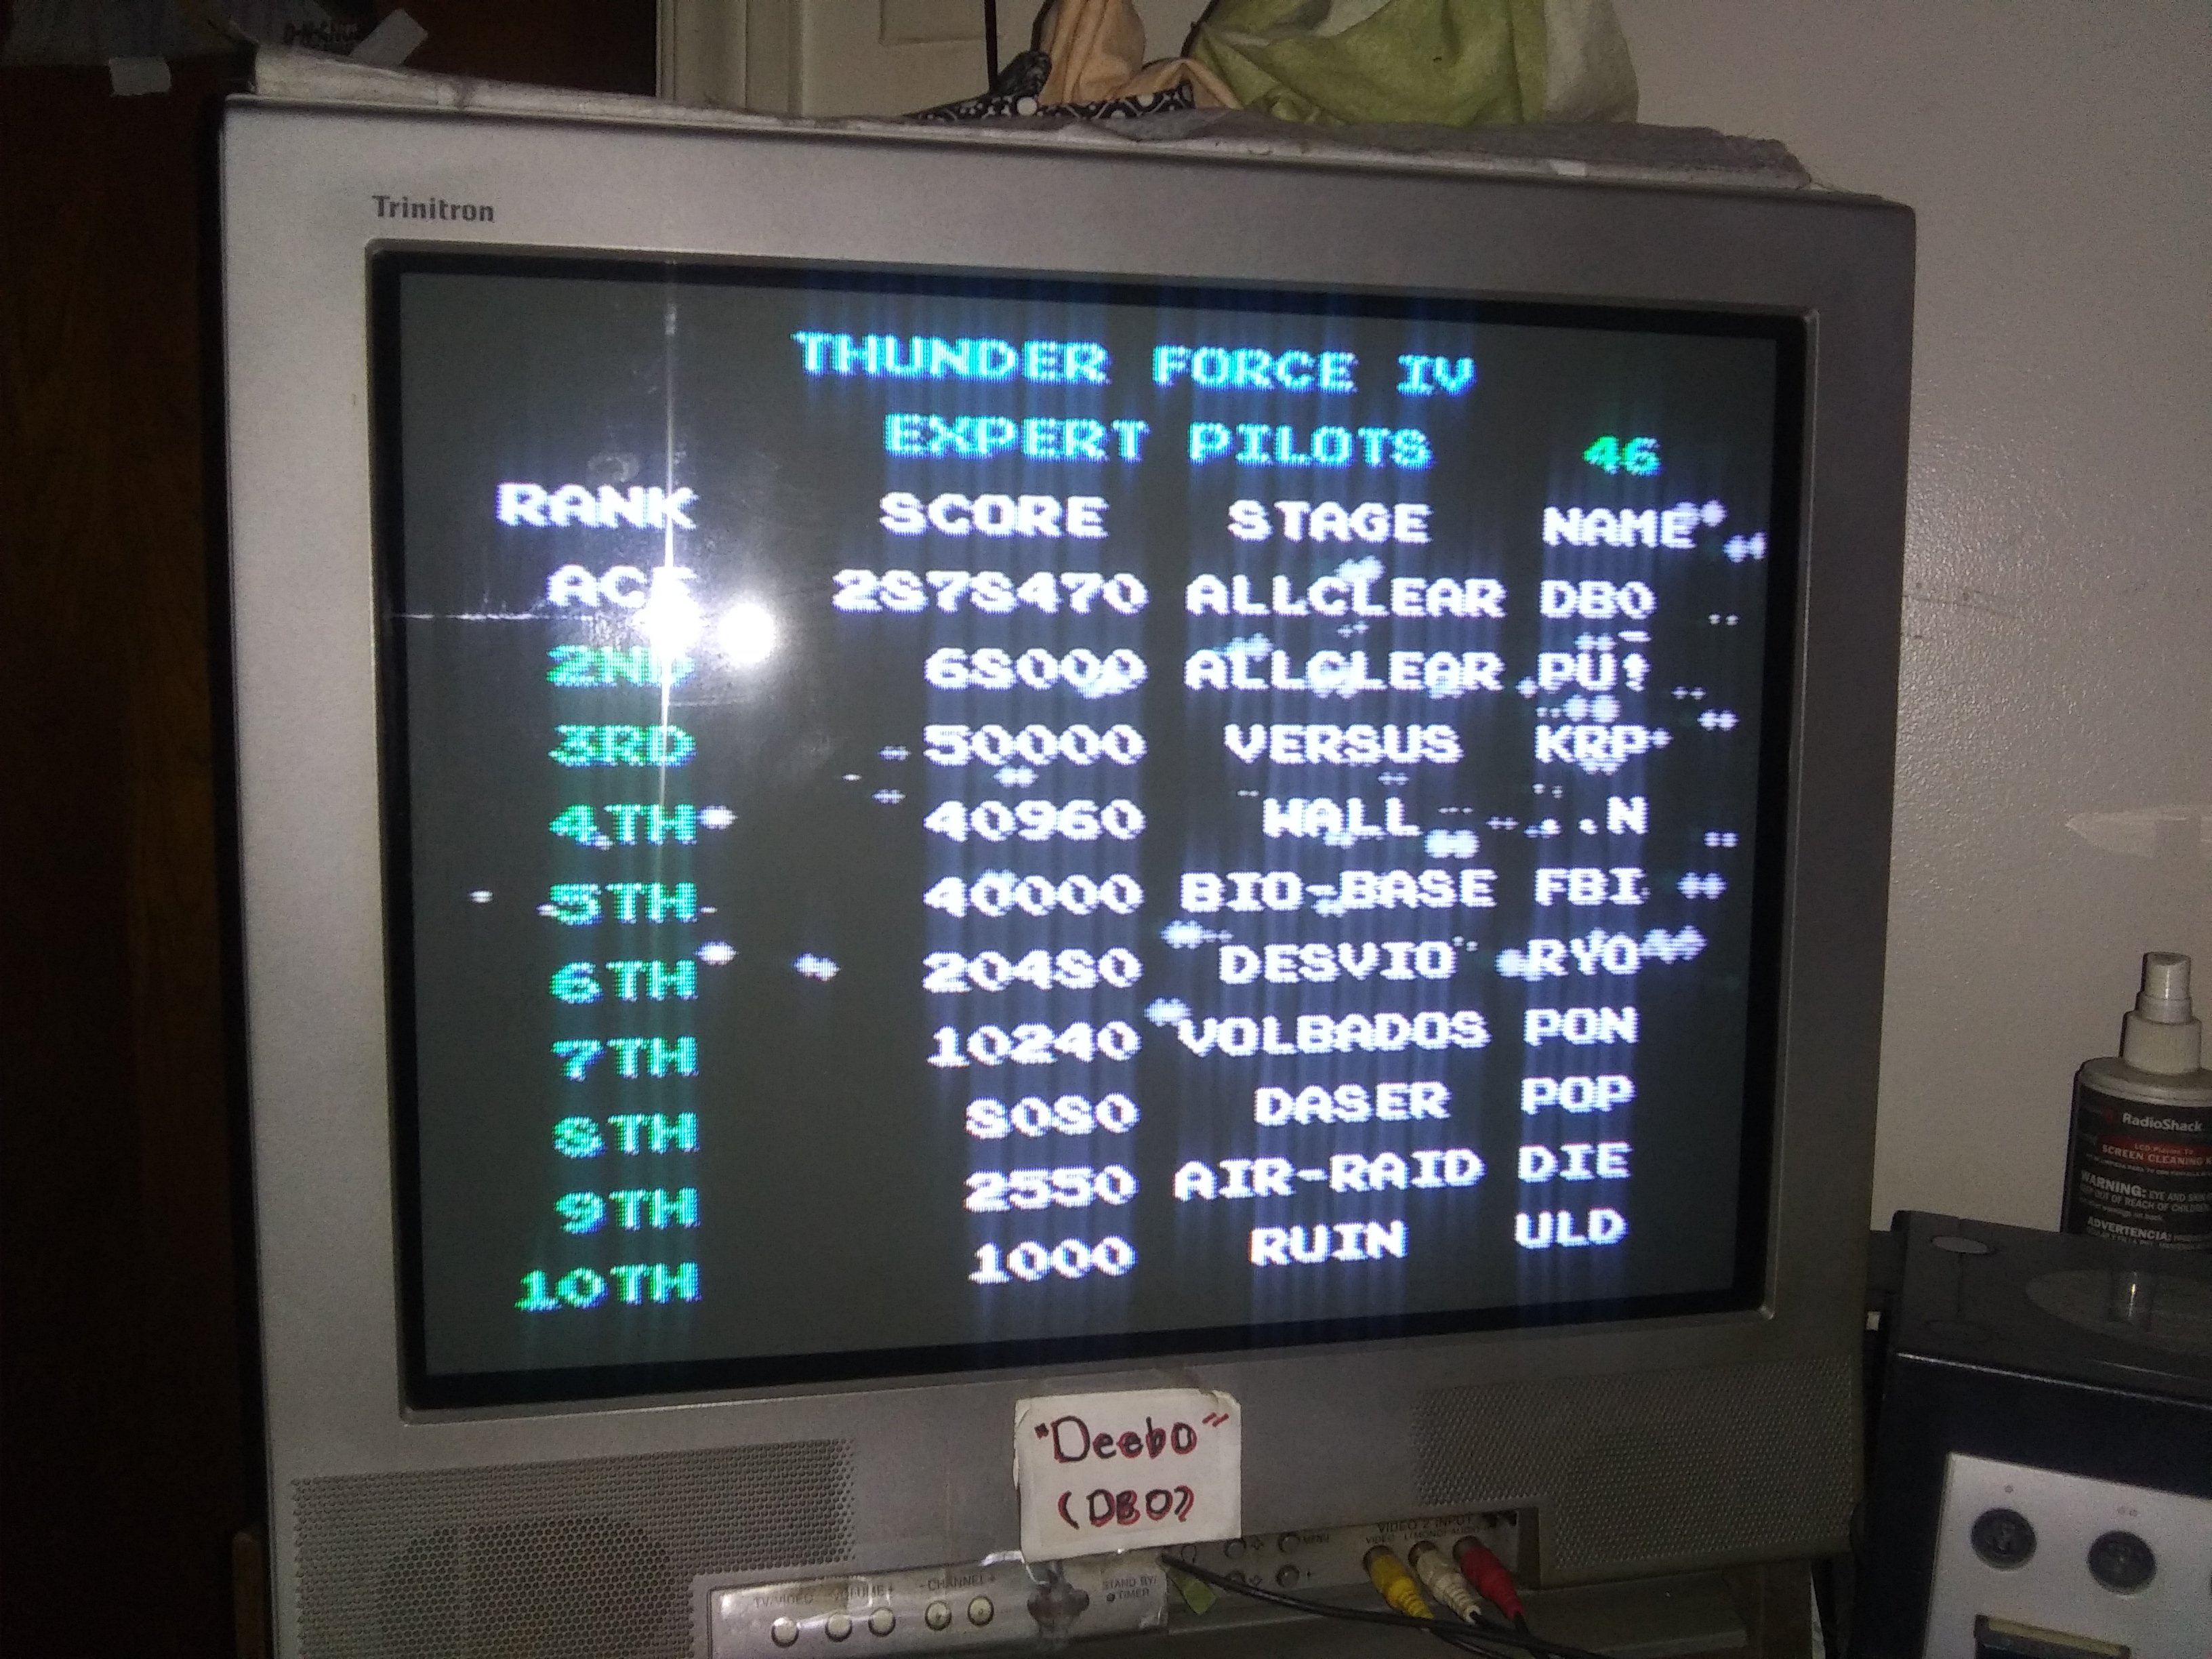 Deebo: Thunder Force IV [Normal] (Sega Genesis / MegaDrive) 2,878,470 points on 2019-07-15 20:54:54